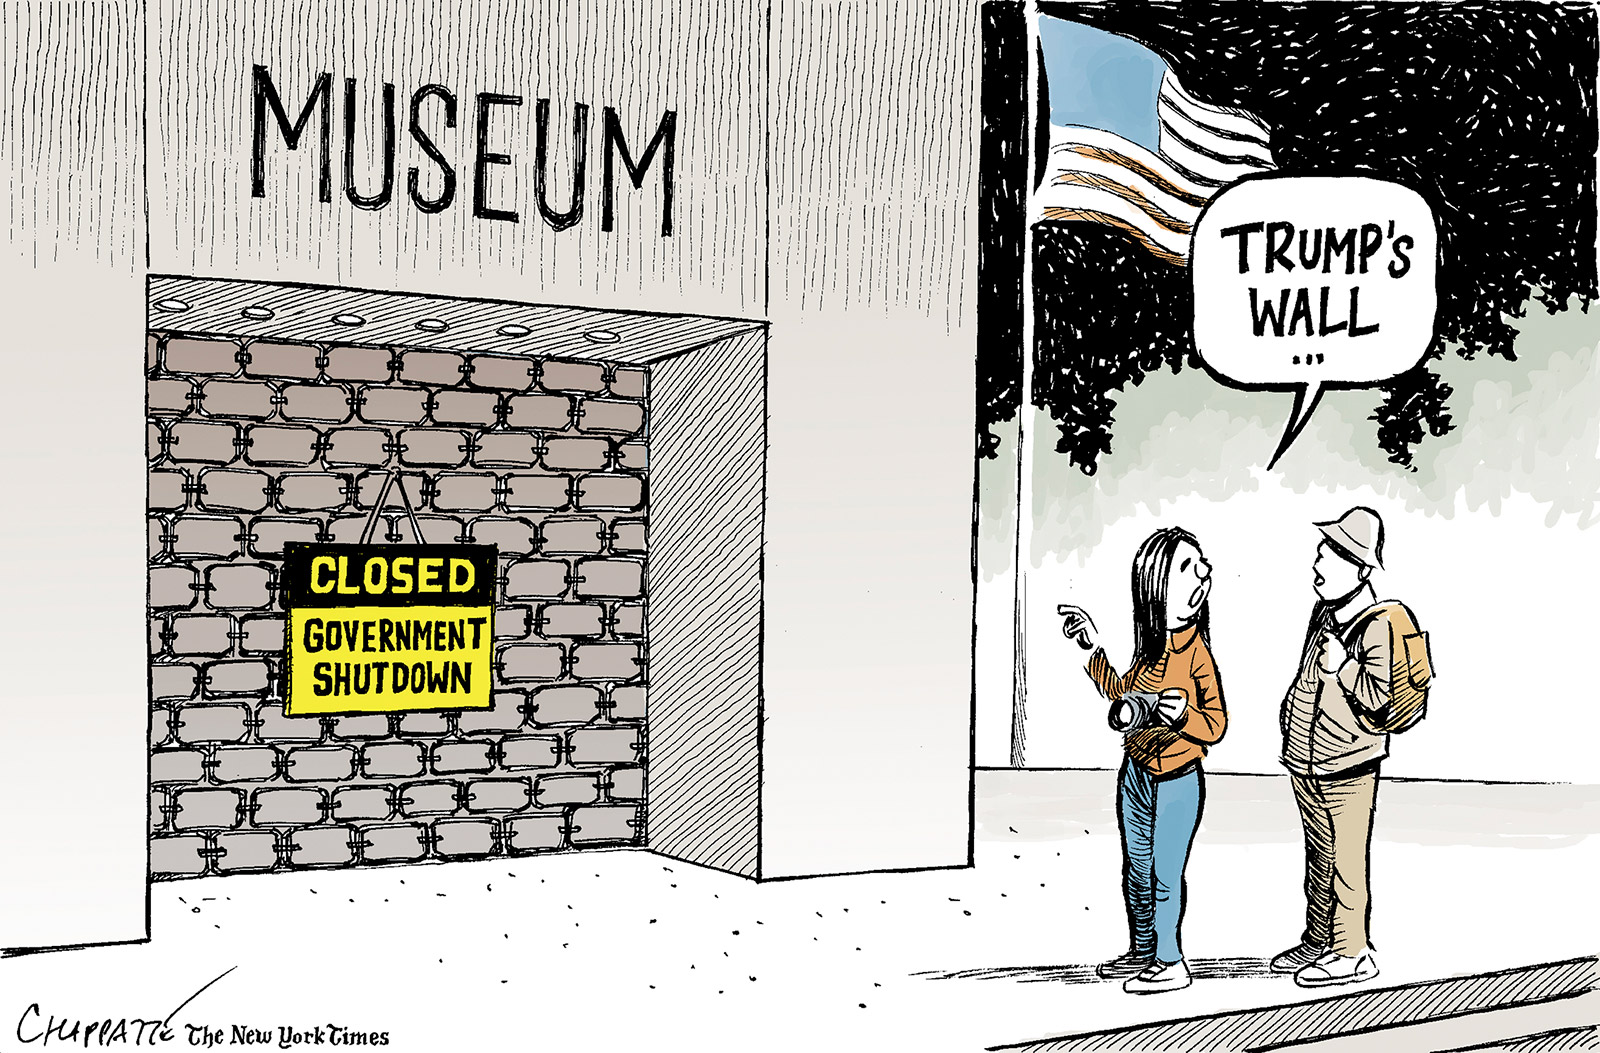 government shutdown political cartoon